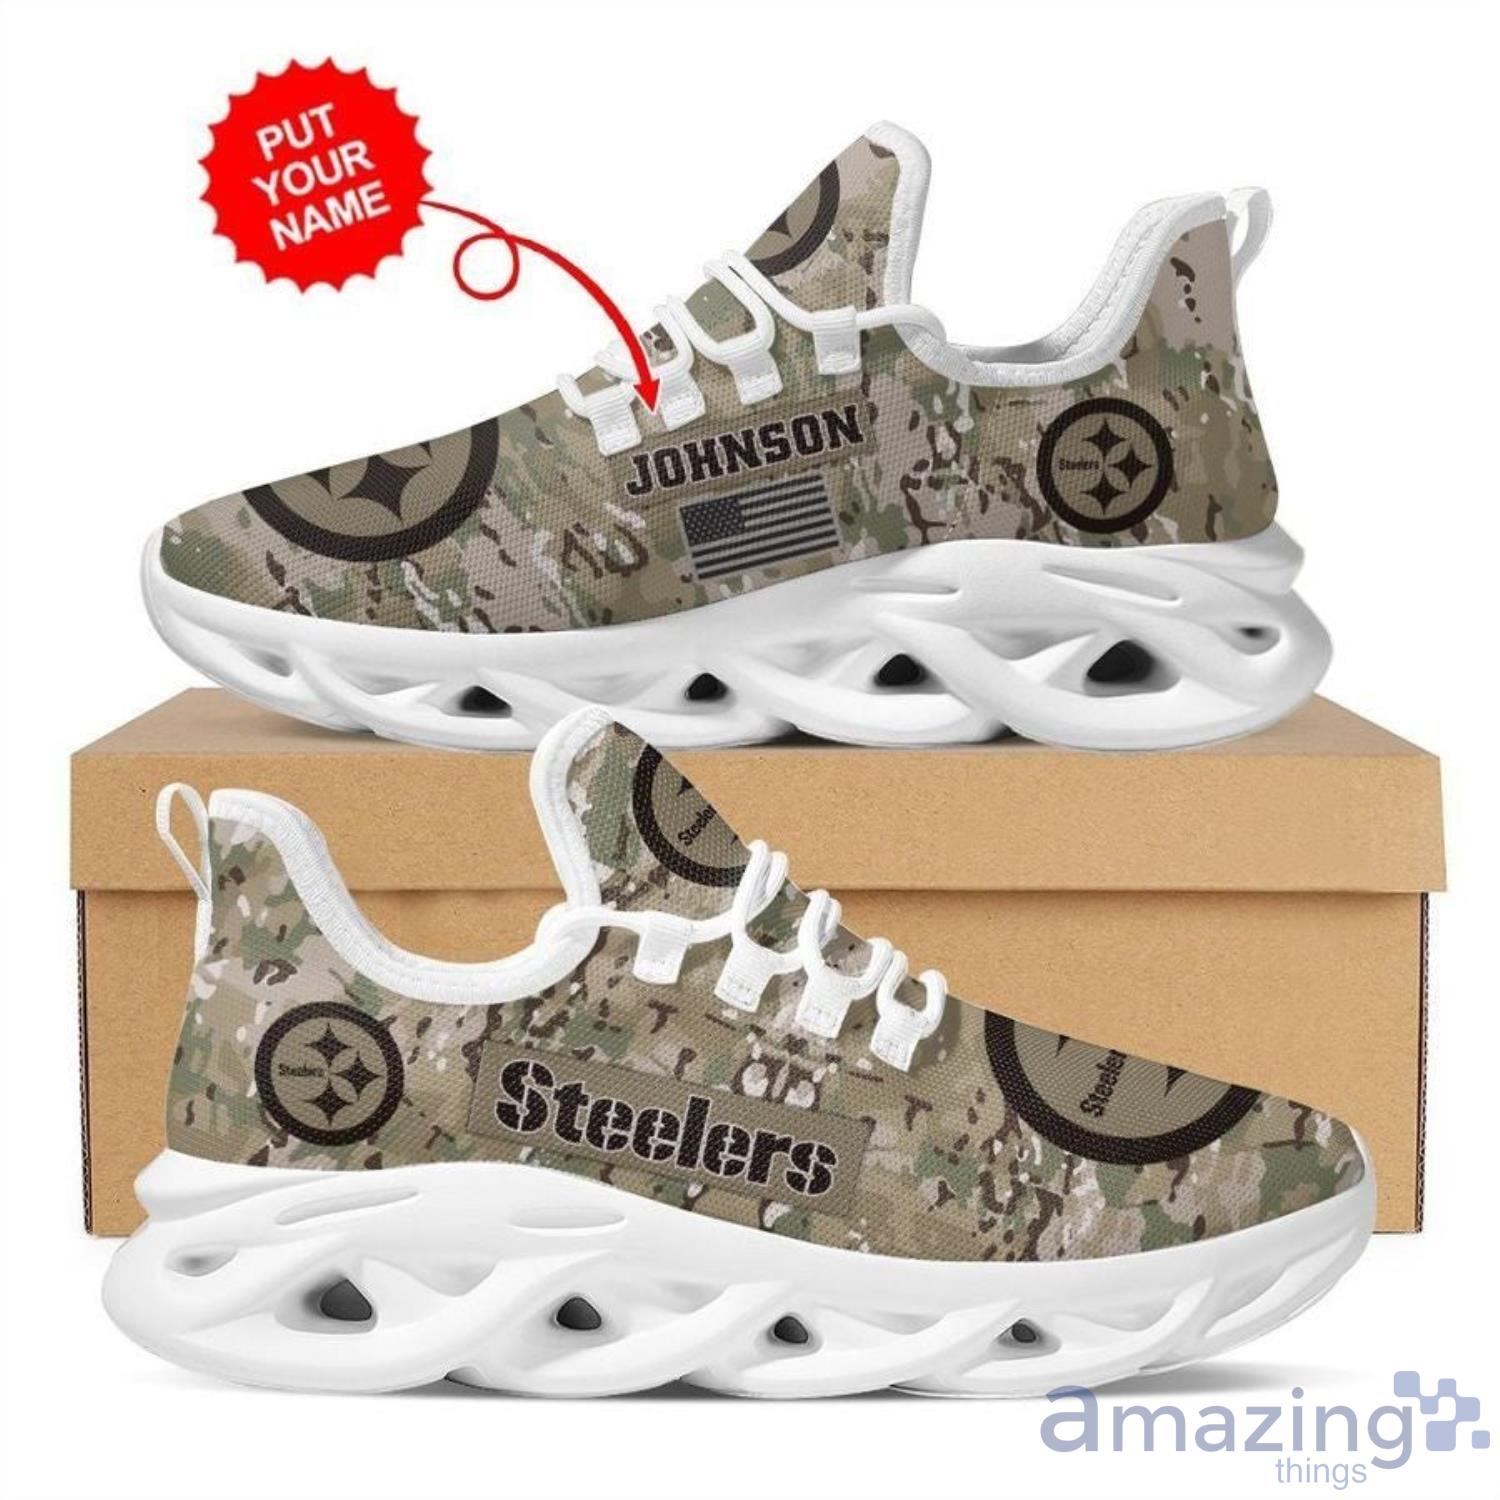 Camouflage Custom Shoes